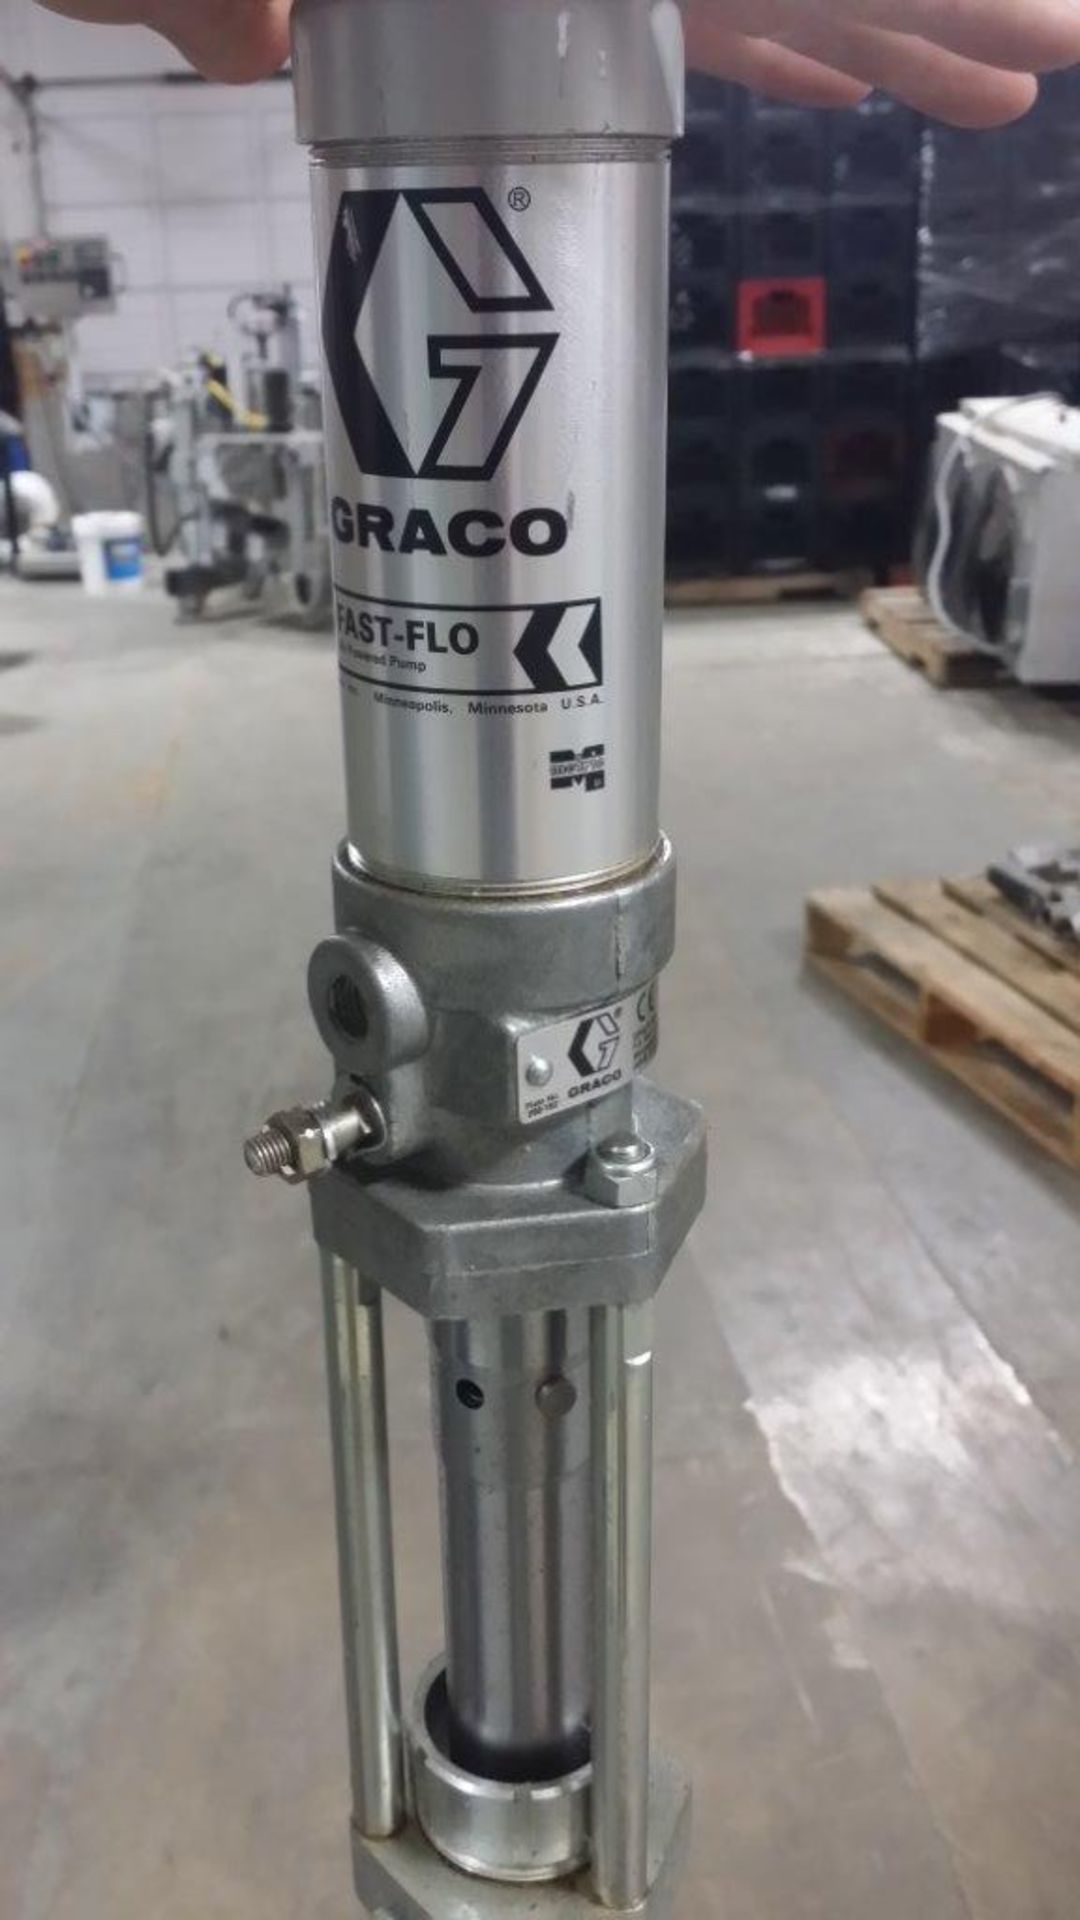 Graco Fast - FLO Pump, Air-Operated Piston Transfer Pump, Part # 226-940, Series H99B Fast Flo 1:1